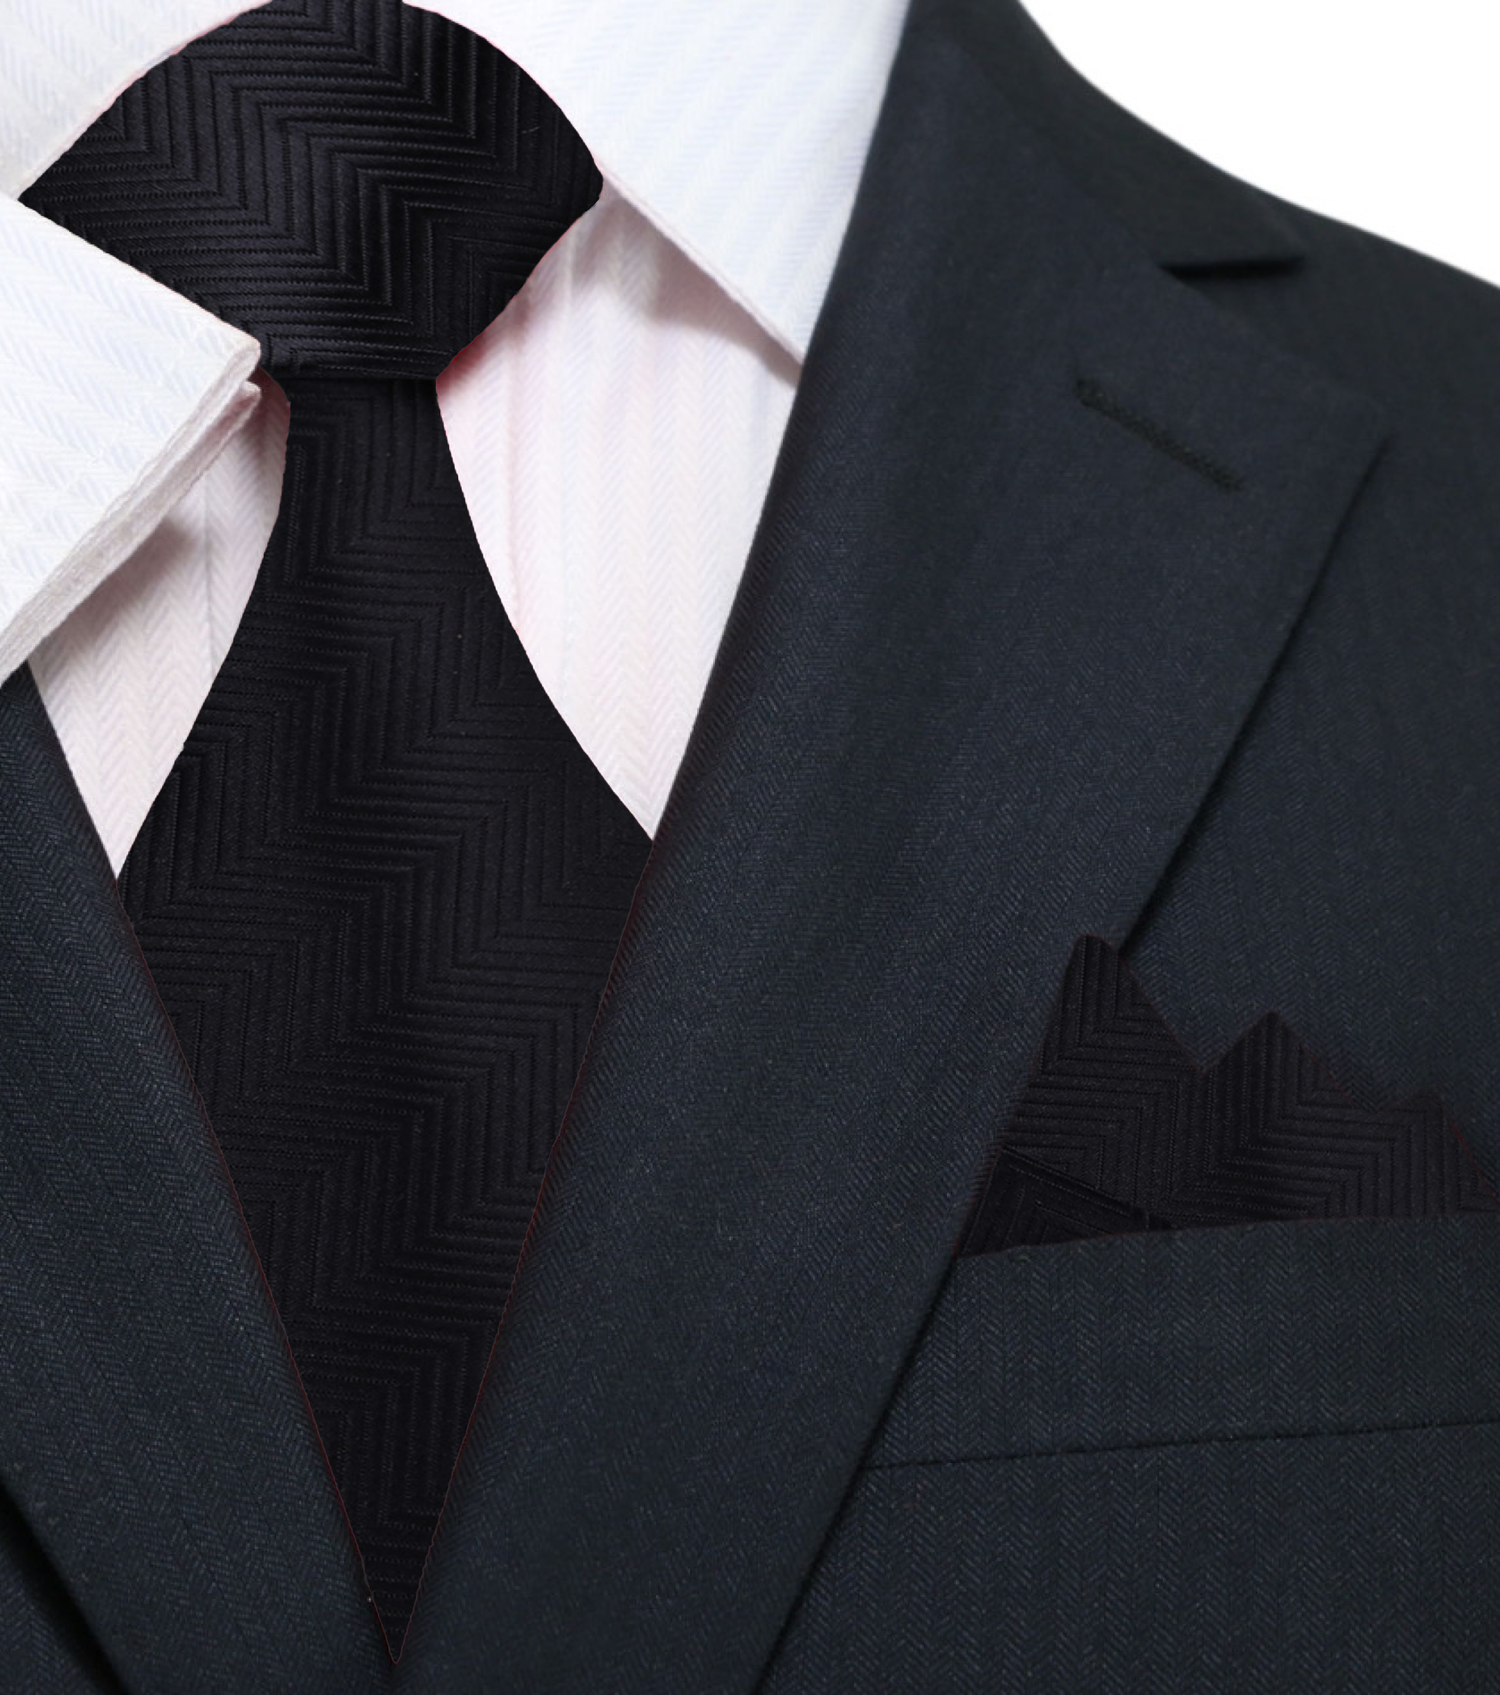 A Solid Black Pattern Silk Necktie, Matching Pocket Square||Black